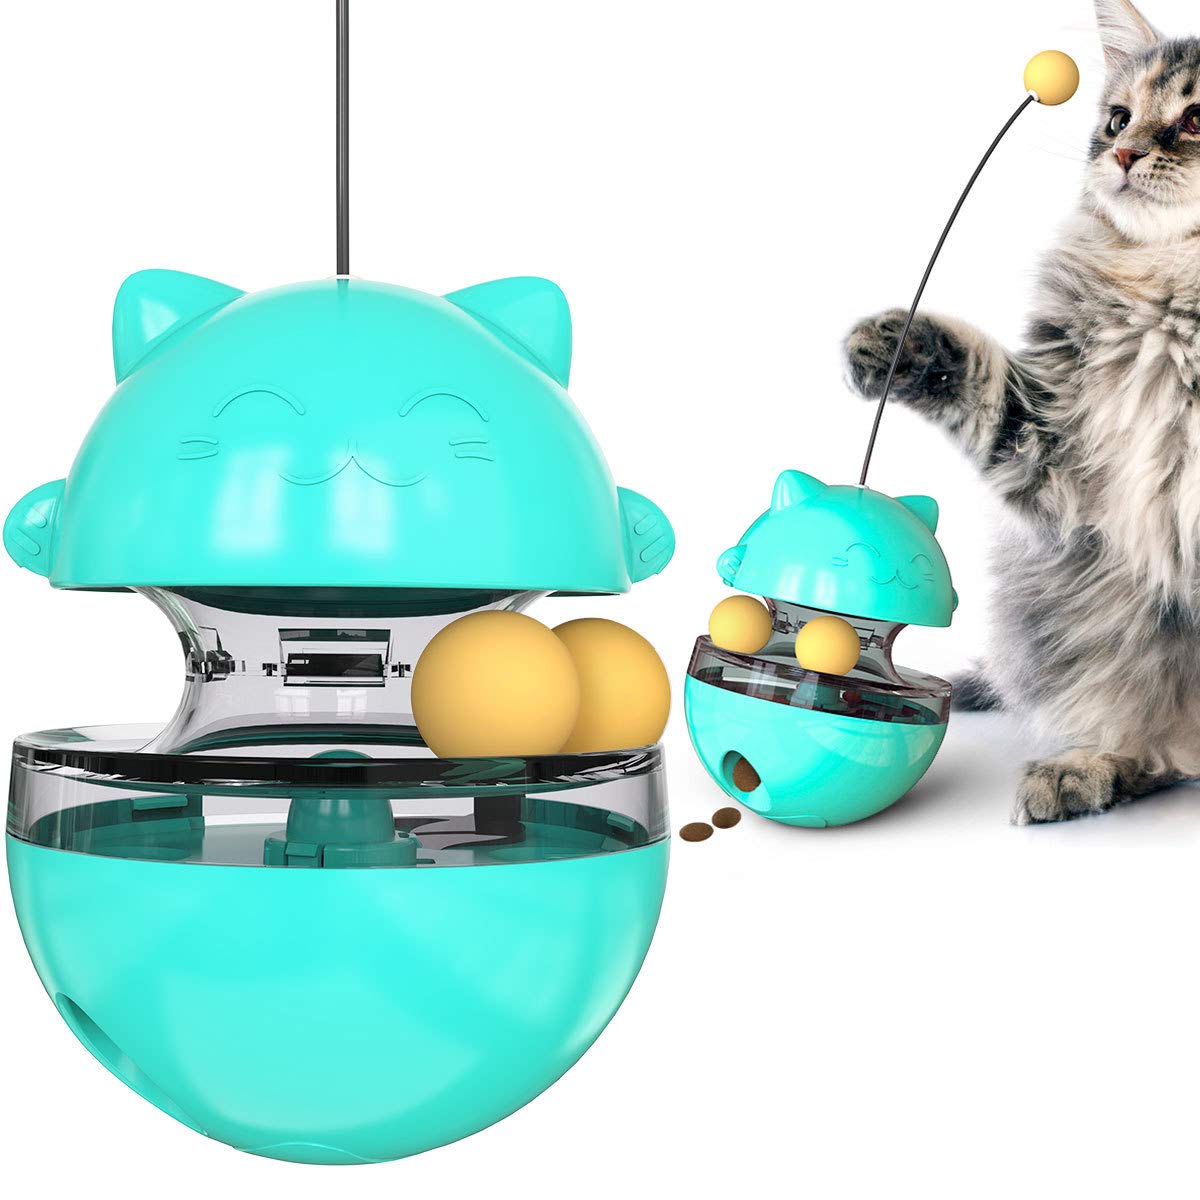 Cat Toy Tumbler cat Turntable Toys